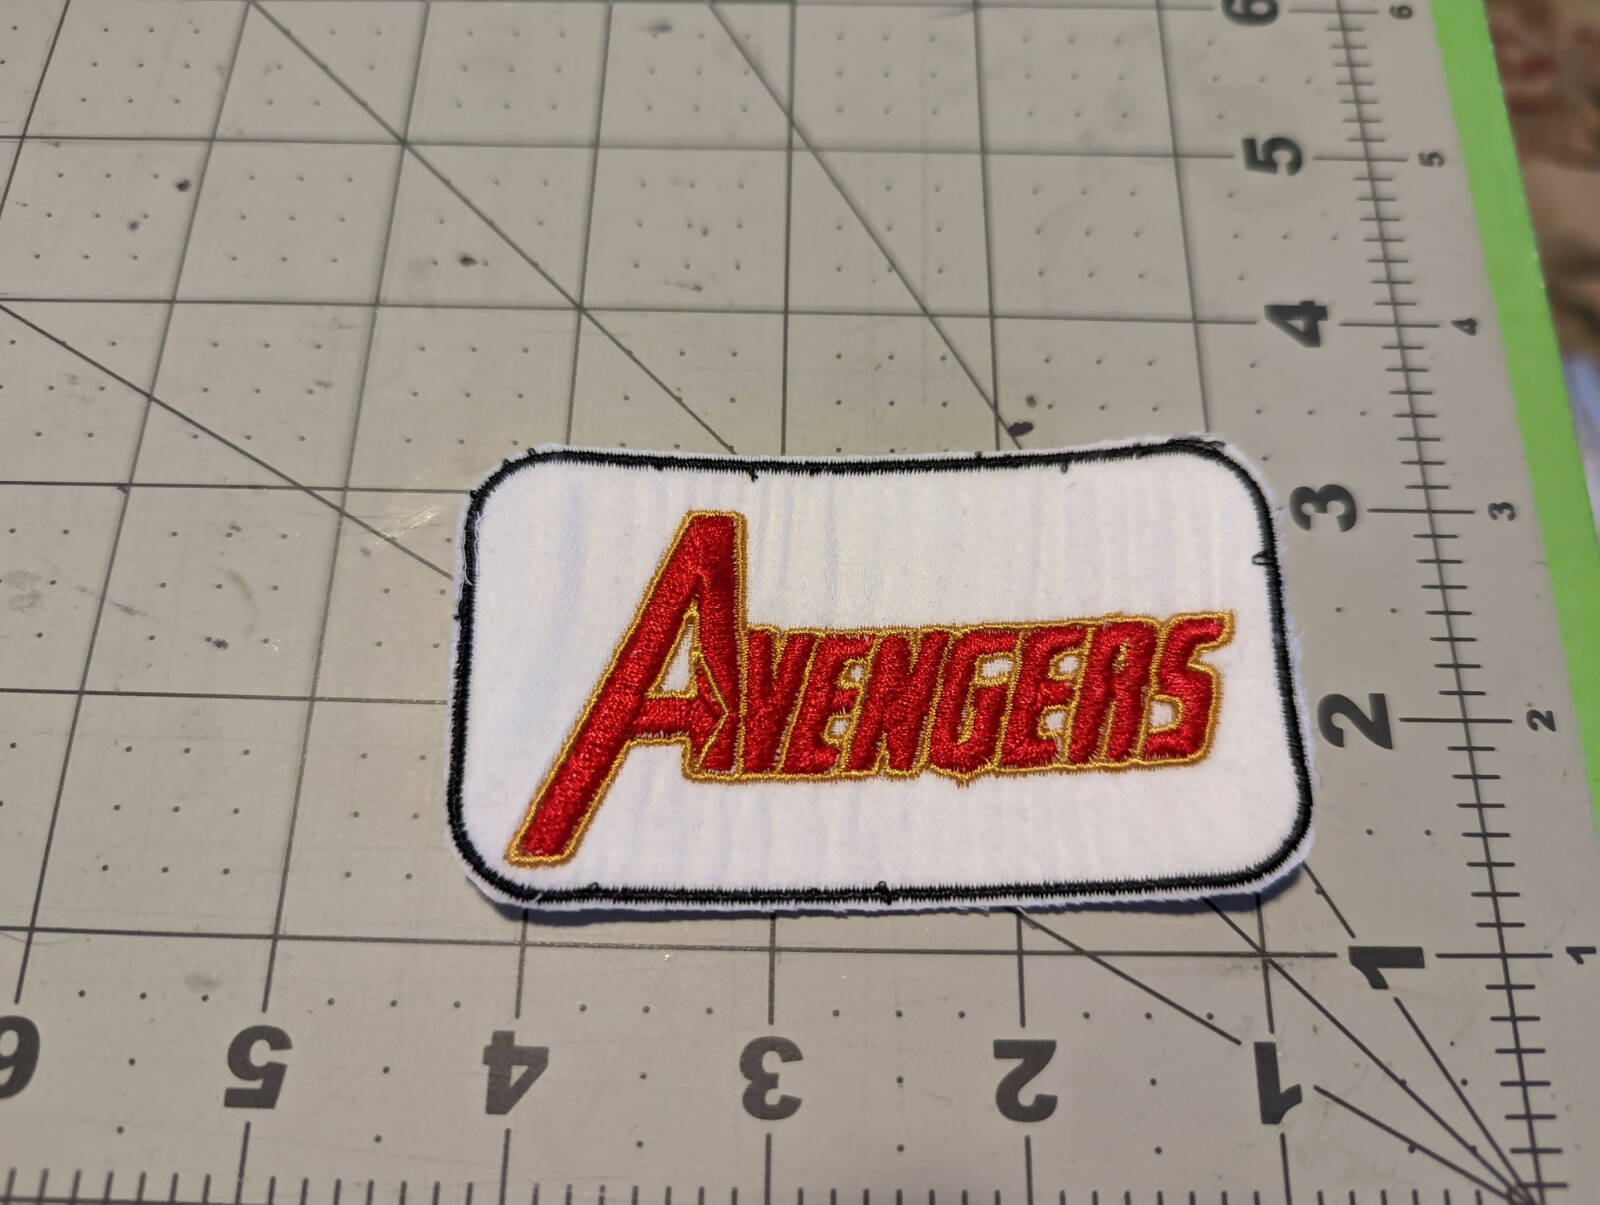 Avengers Comics Logo Iron On Patch